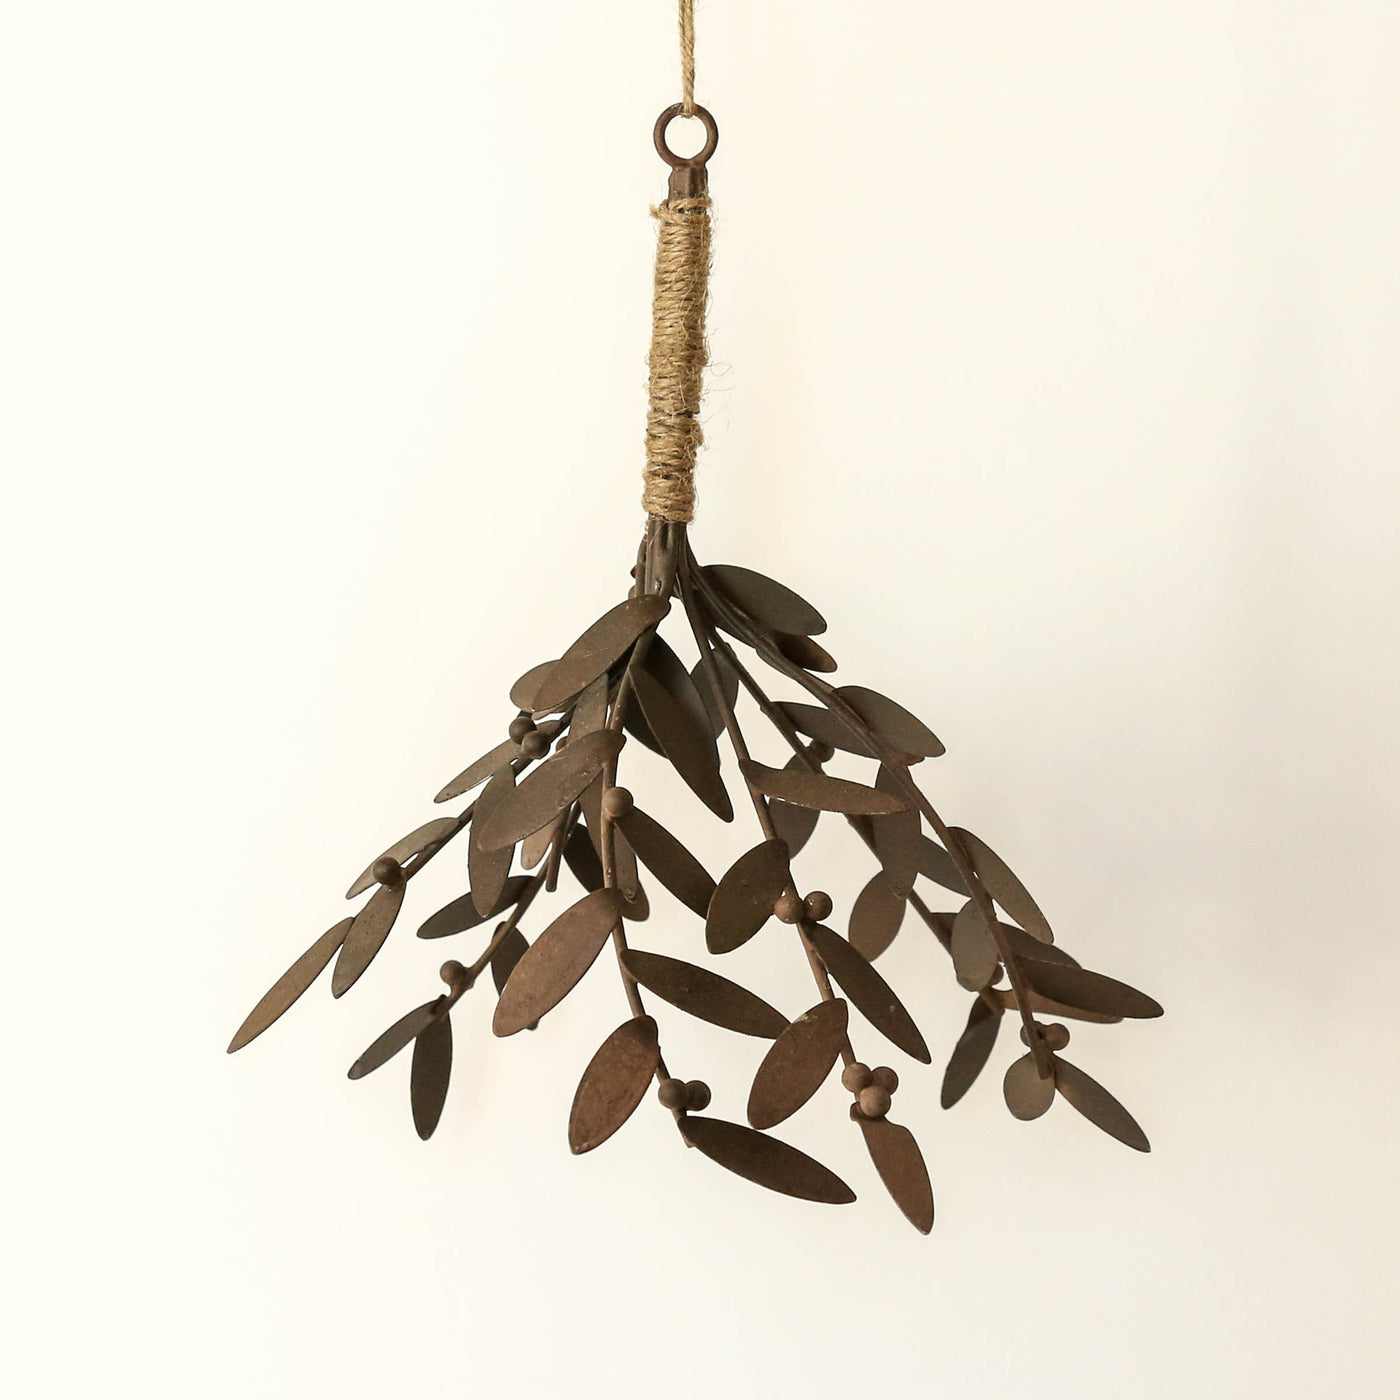 Bunch of Metal Mistletoe Hanging Christmas Decoration - Antique Bronze